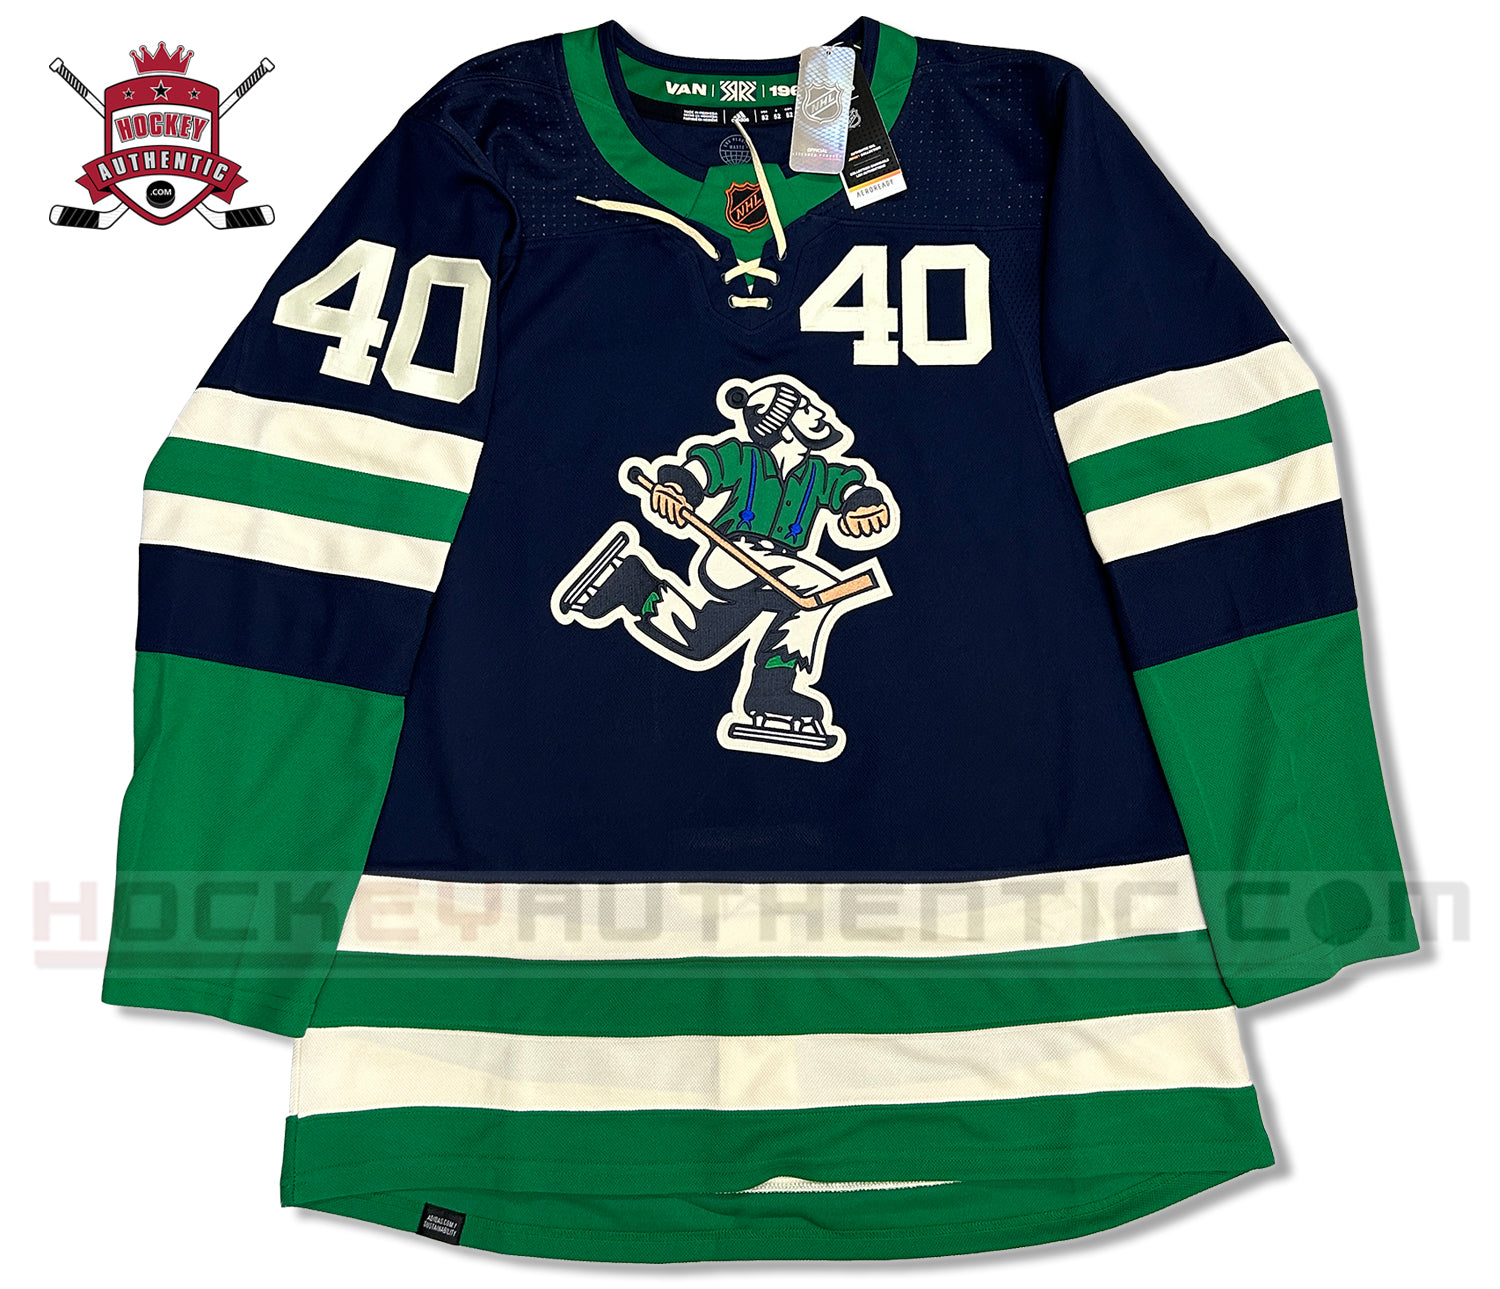 Custom Name & Number NHL Vancouver Canucks Reverse Retro Alternate